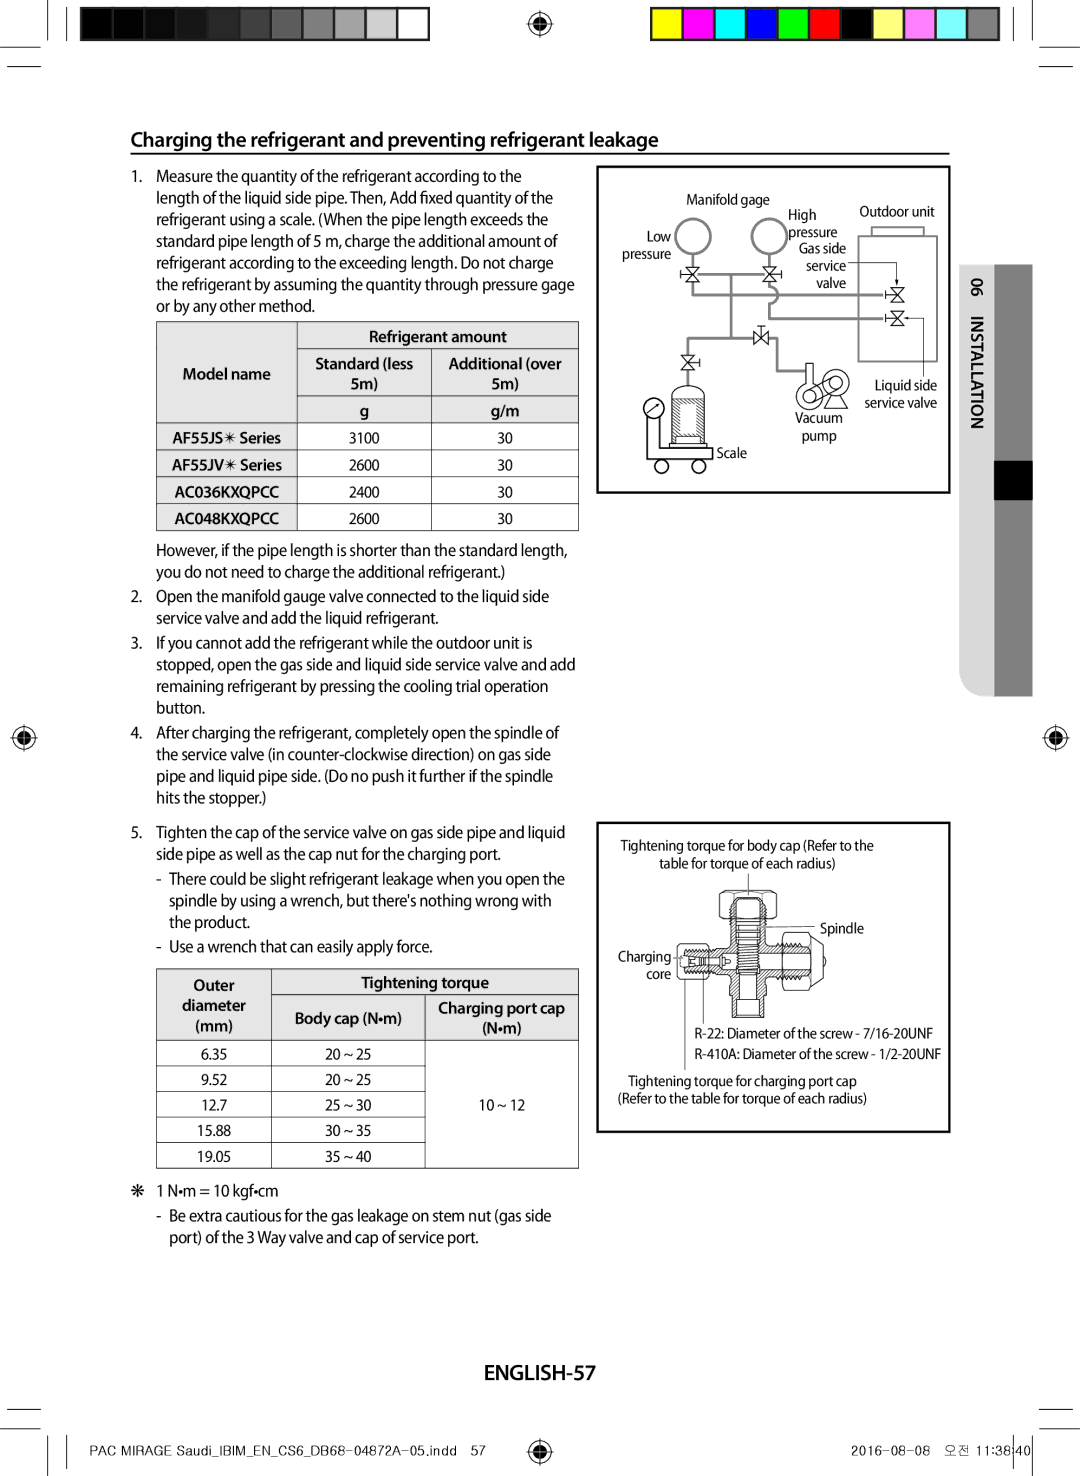 Samsung AF55JV1MAEENMG manual Charging the refrigerant and preventing refrigerant leakage, ENGLISH-57, Nm = 10 kgfcm 